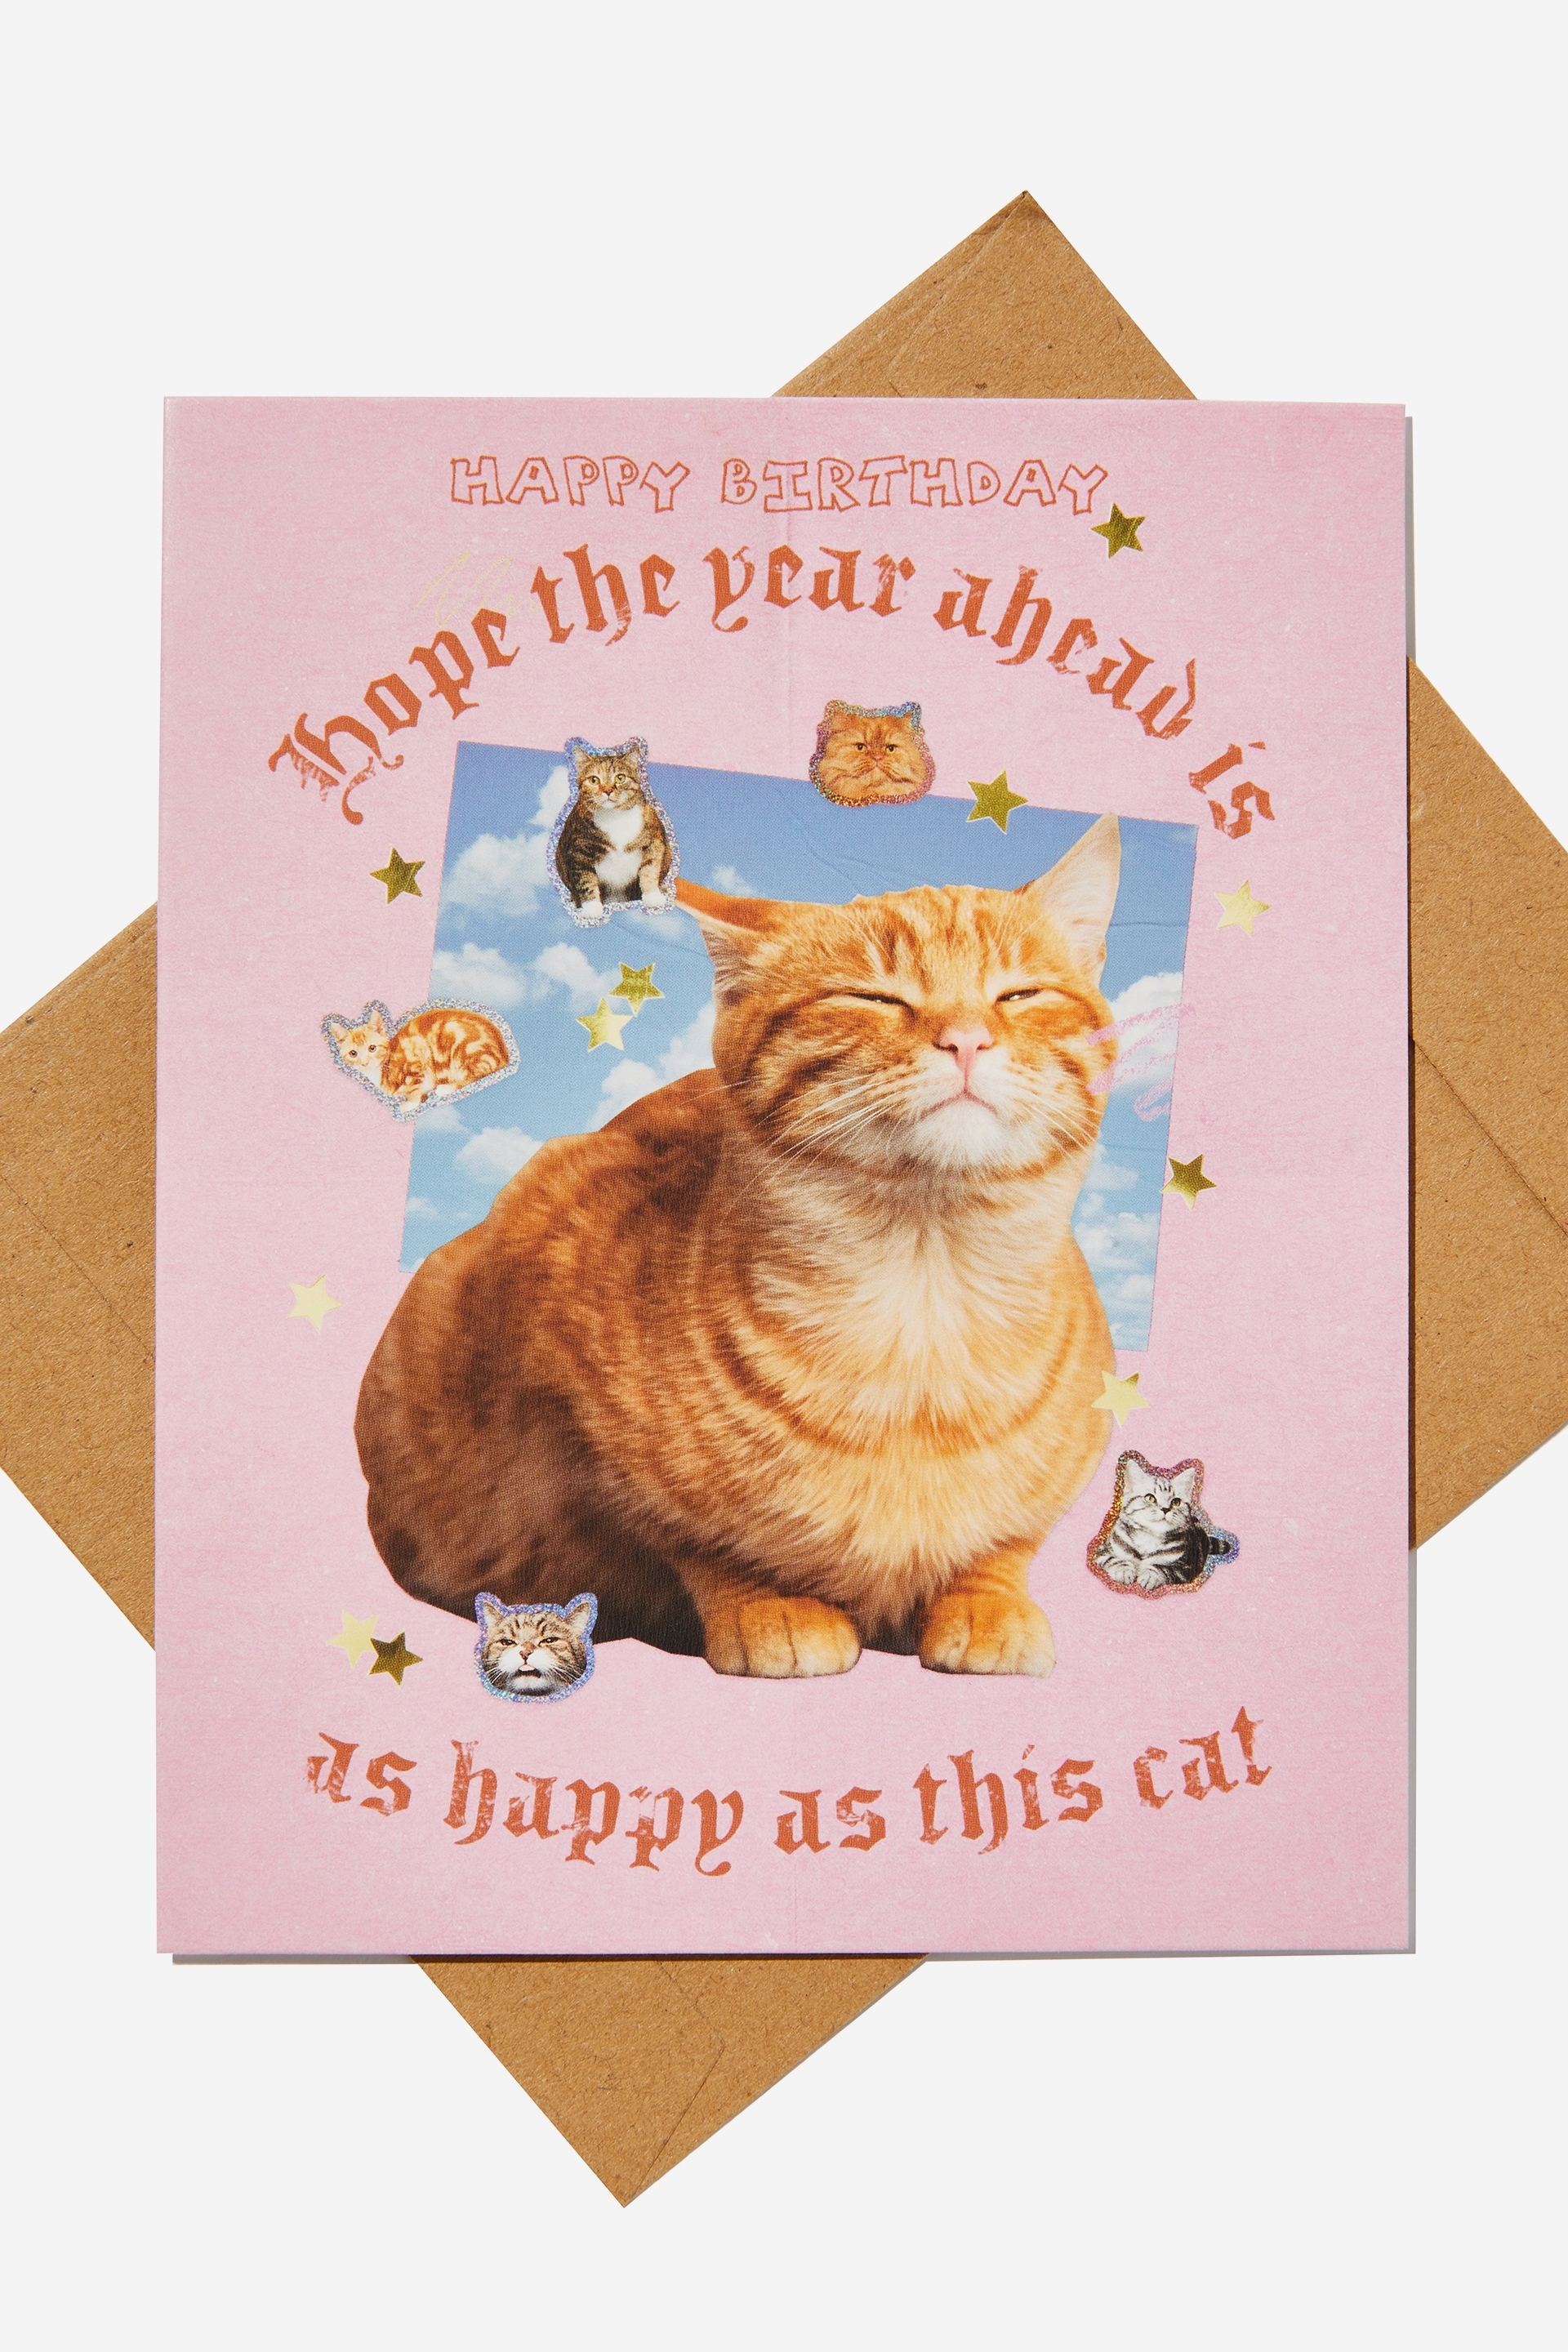 Typo - Nice Birthday Card - The year ahead happy cat